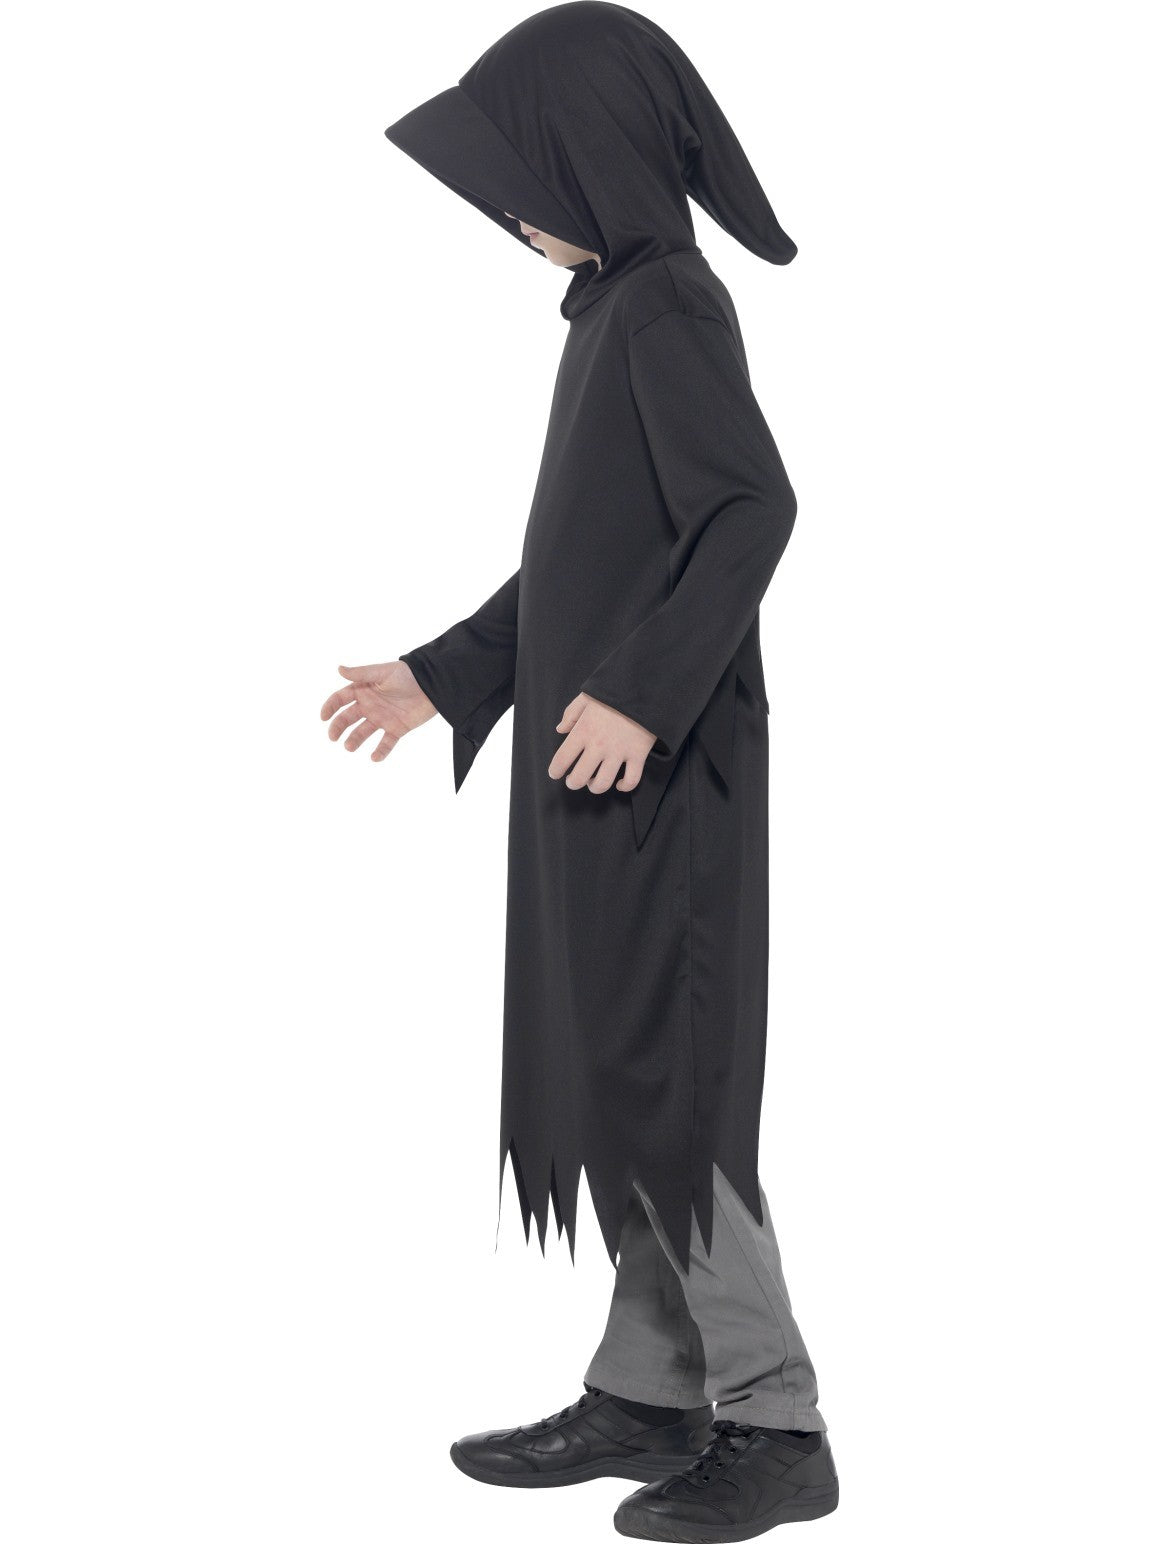 Boys Dark Reaper Costume